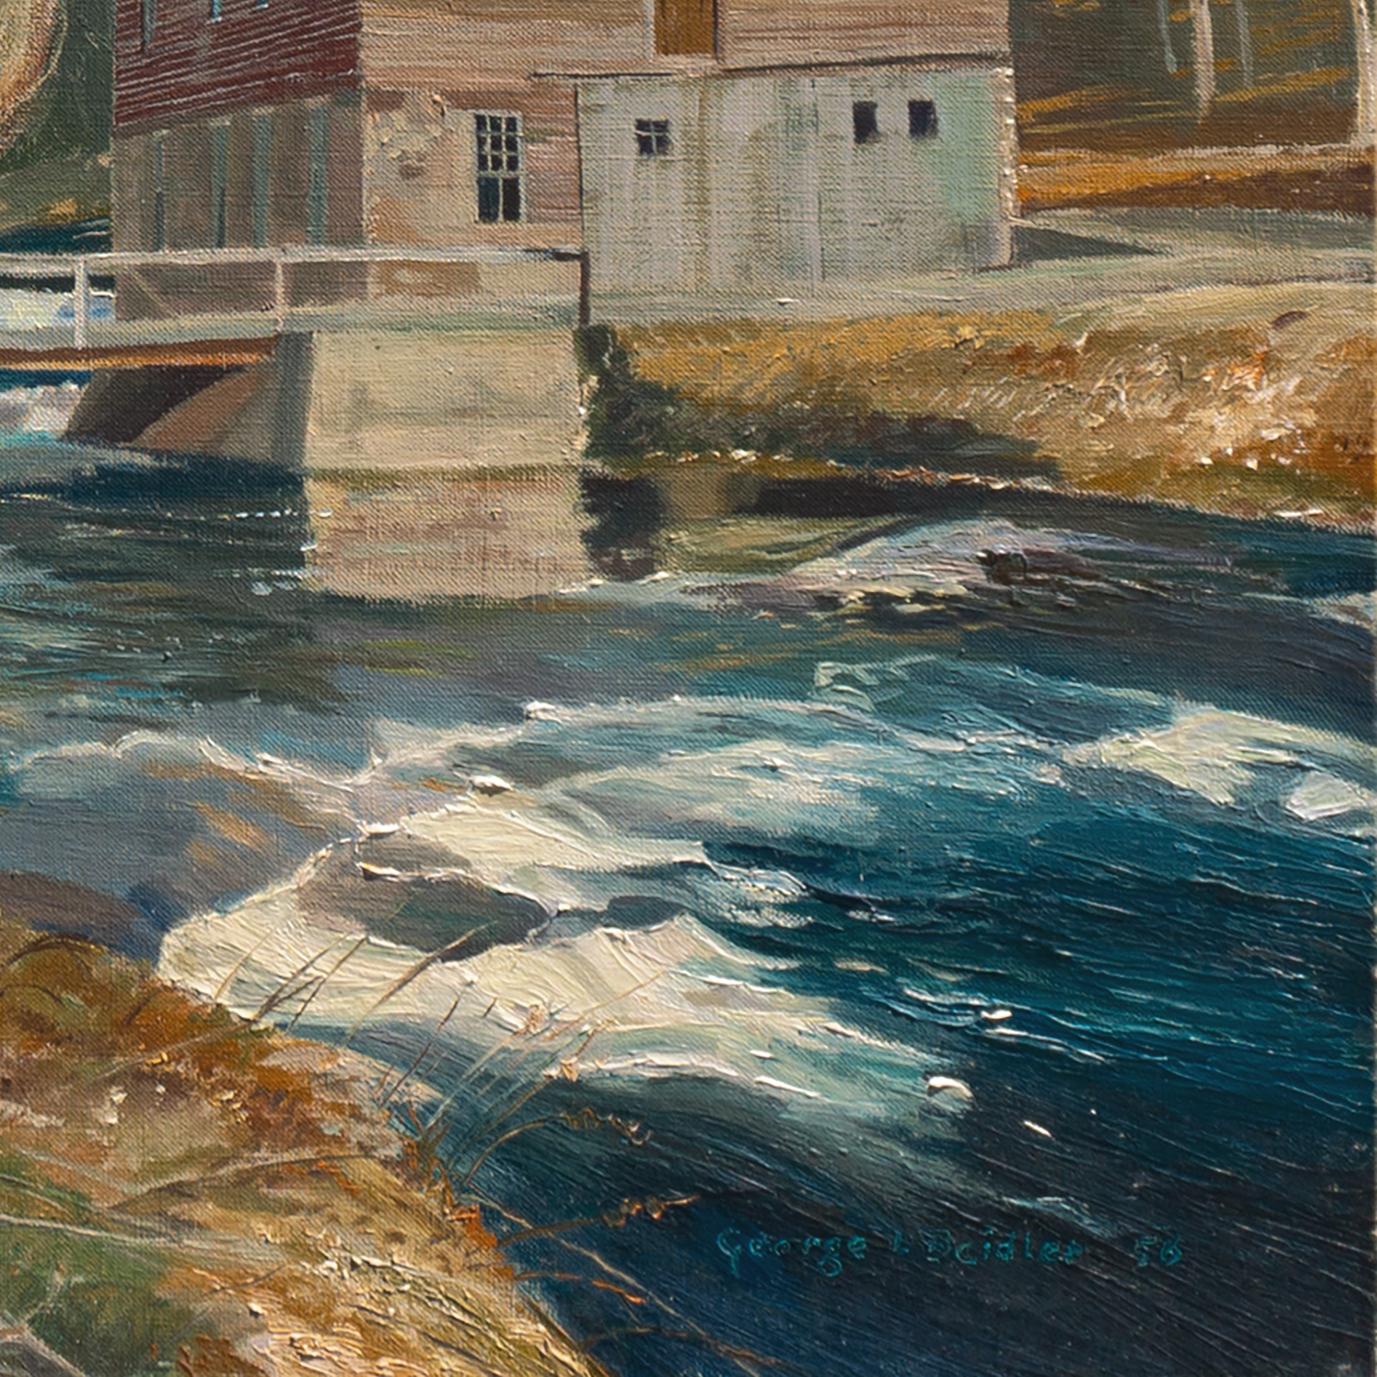 „Old Minisink Mill“, Marshalls Creek, Silver Lake, PA, Doylestown Art League  (Realismus), Painting, von George Beidler, Jr.